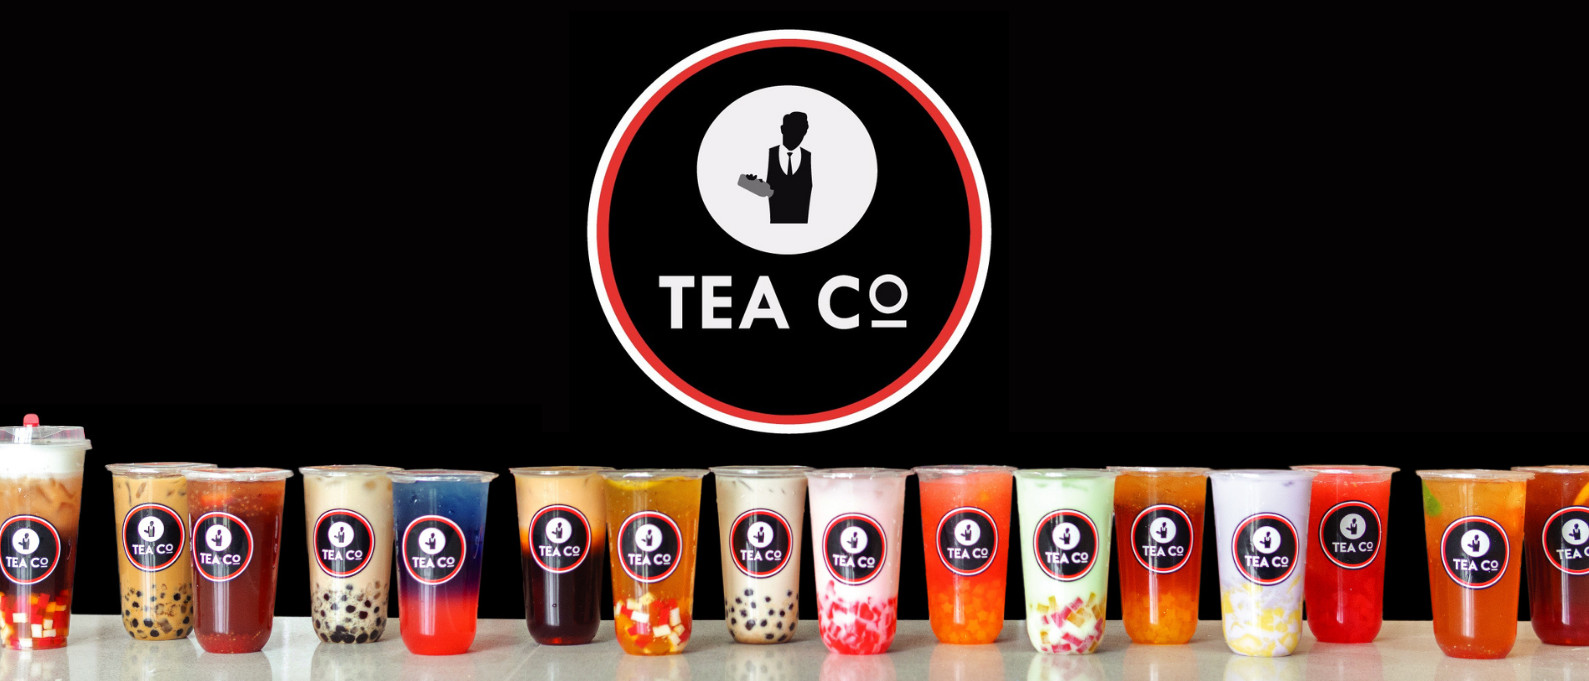 Line of drinks under Tea Co logo